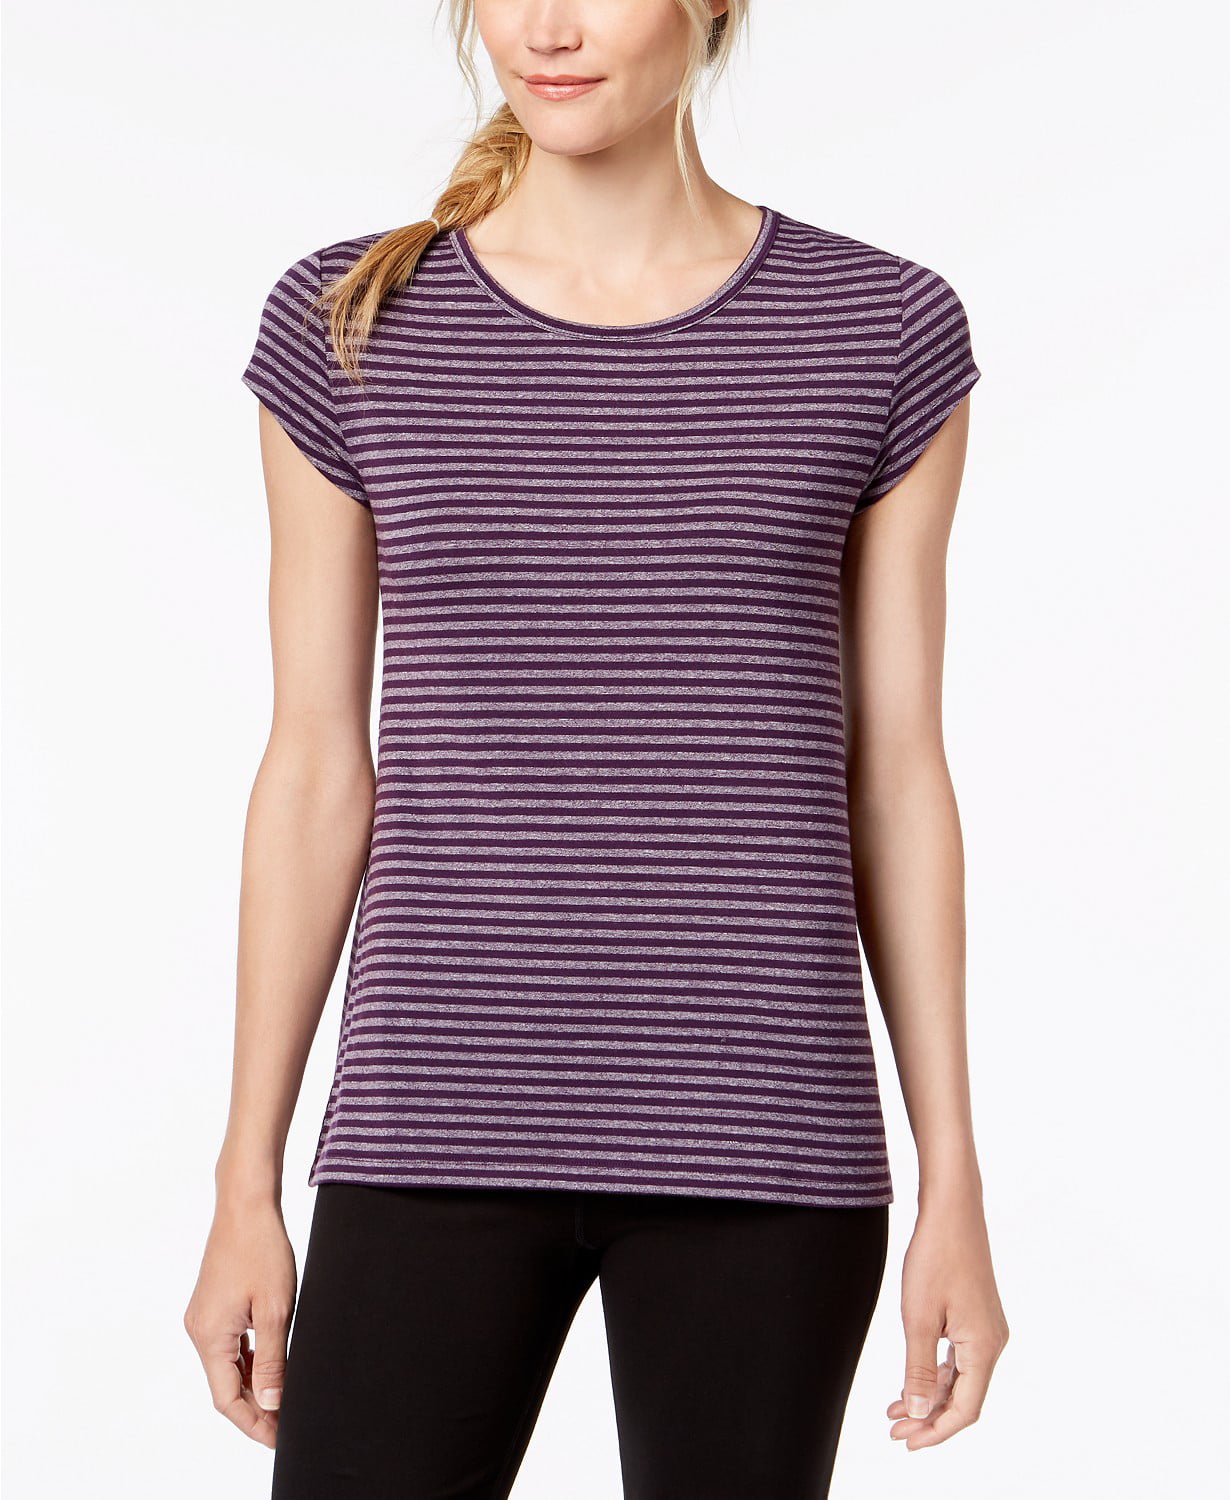 Ideology Women's Striped Cutout-Back Athletic Top, Eggplant Stripe, M